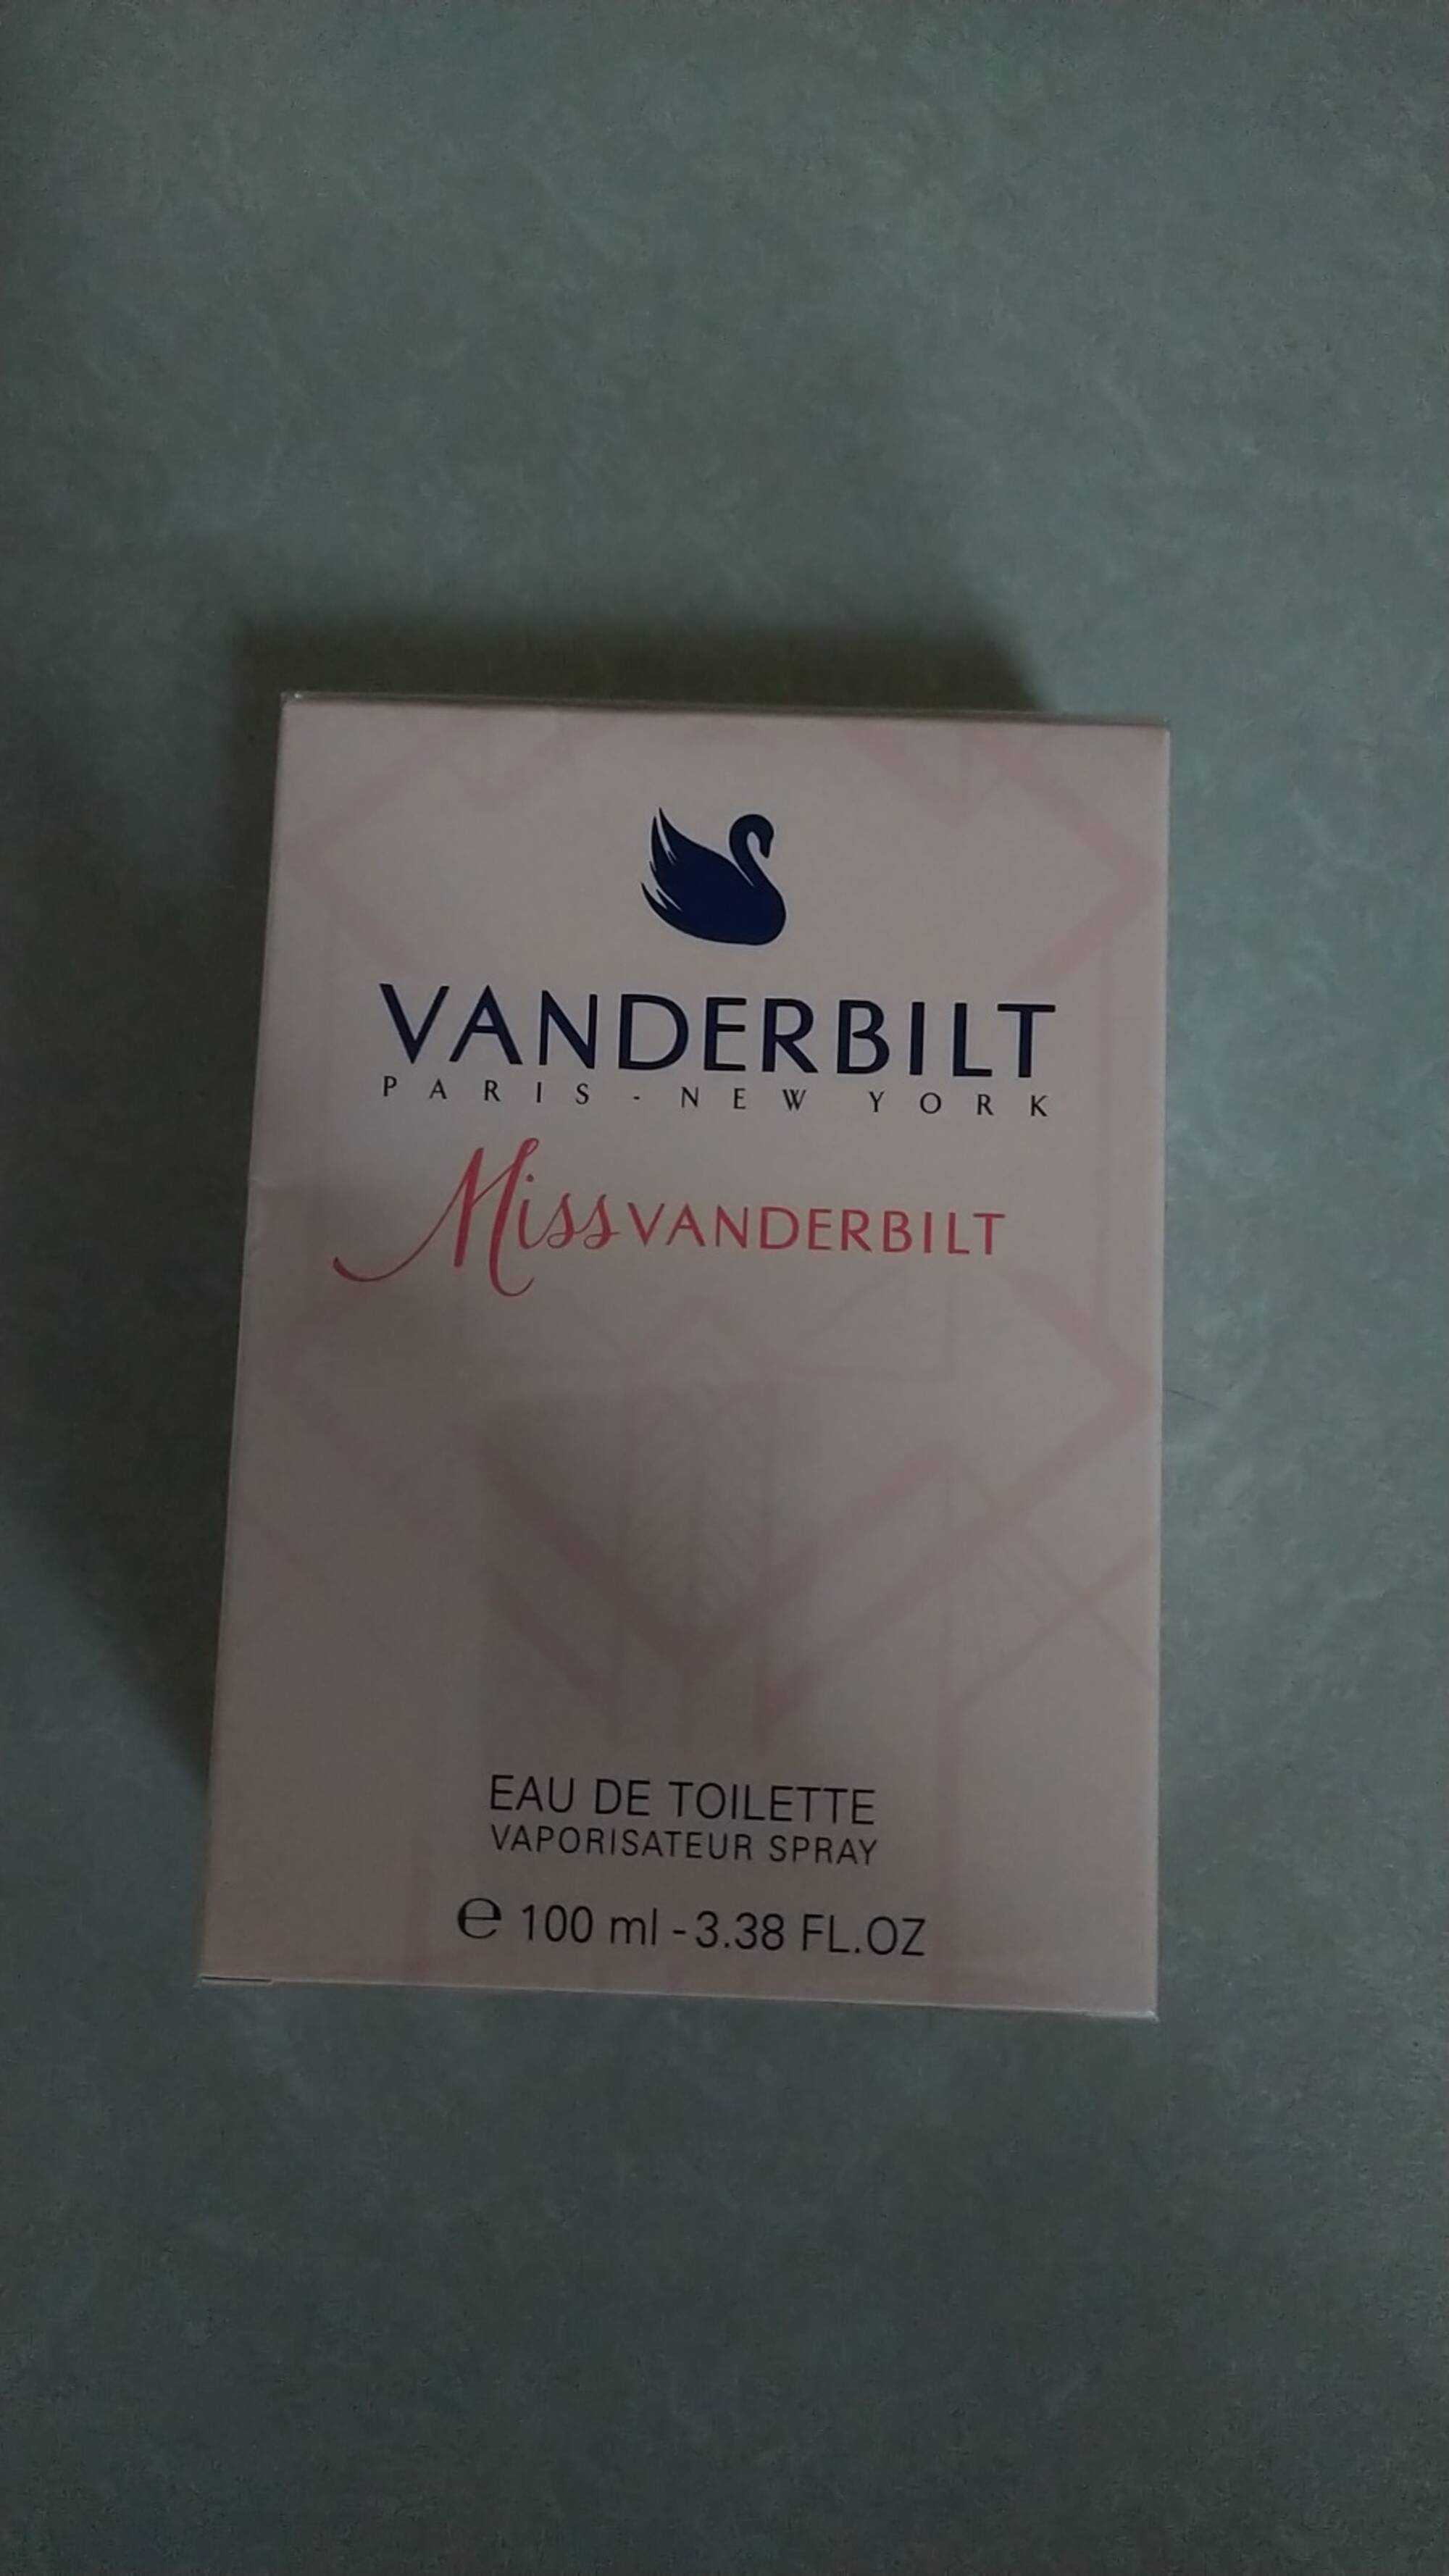 VANDERBILT - Miss vanderbilt - Eau de toilette 